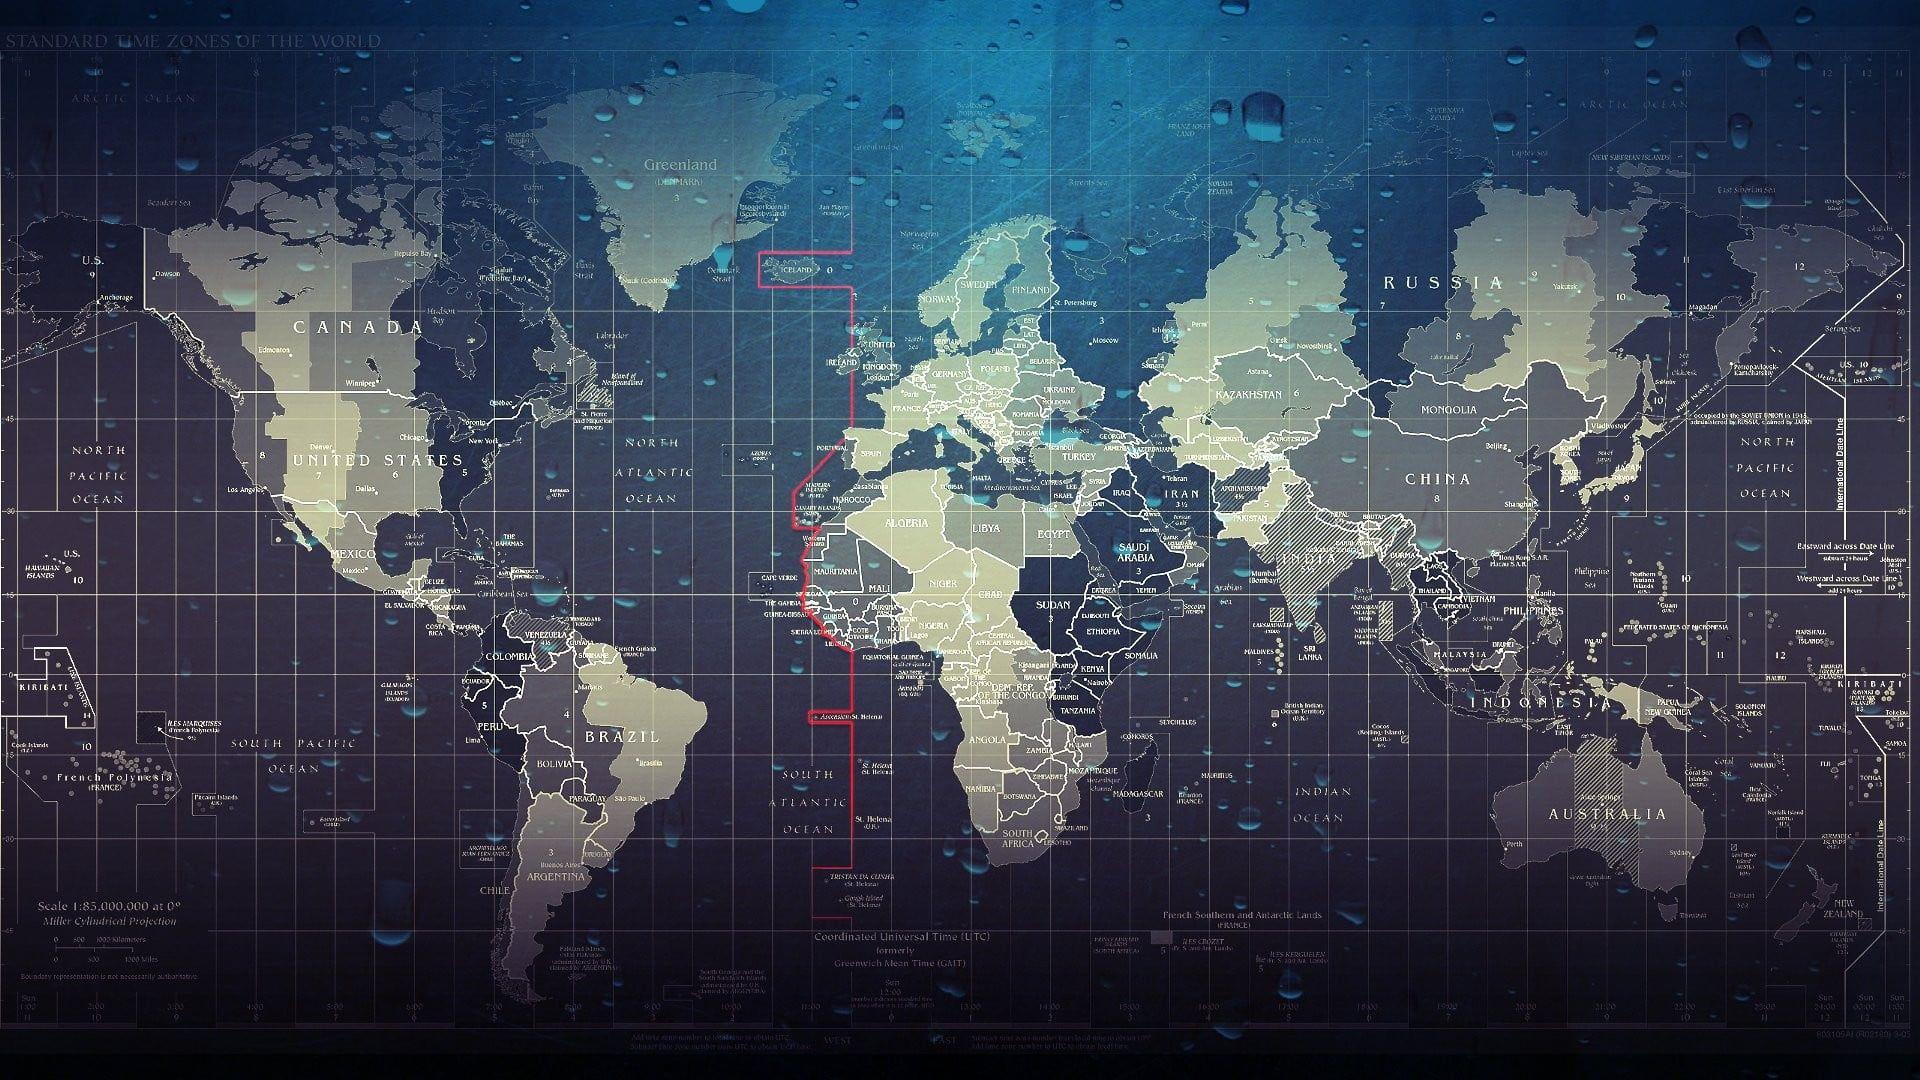 Digital World Map Wallpapers